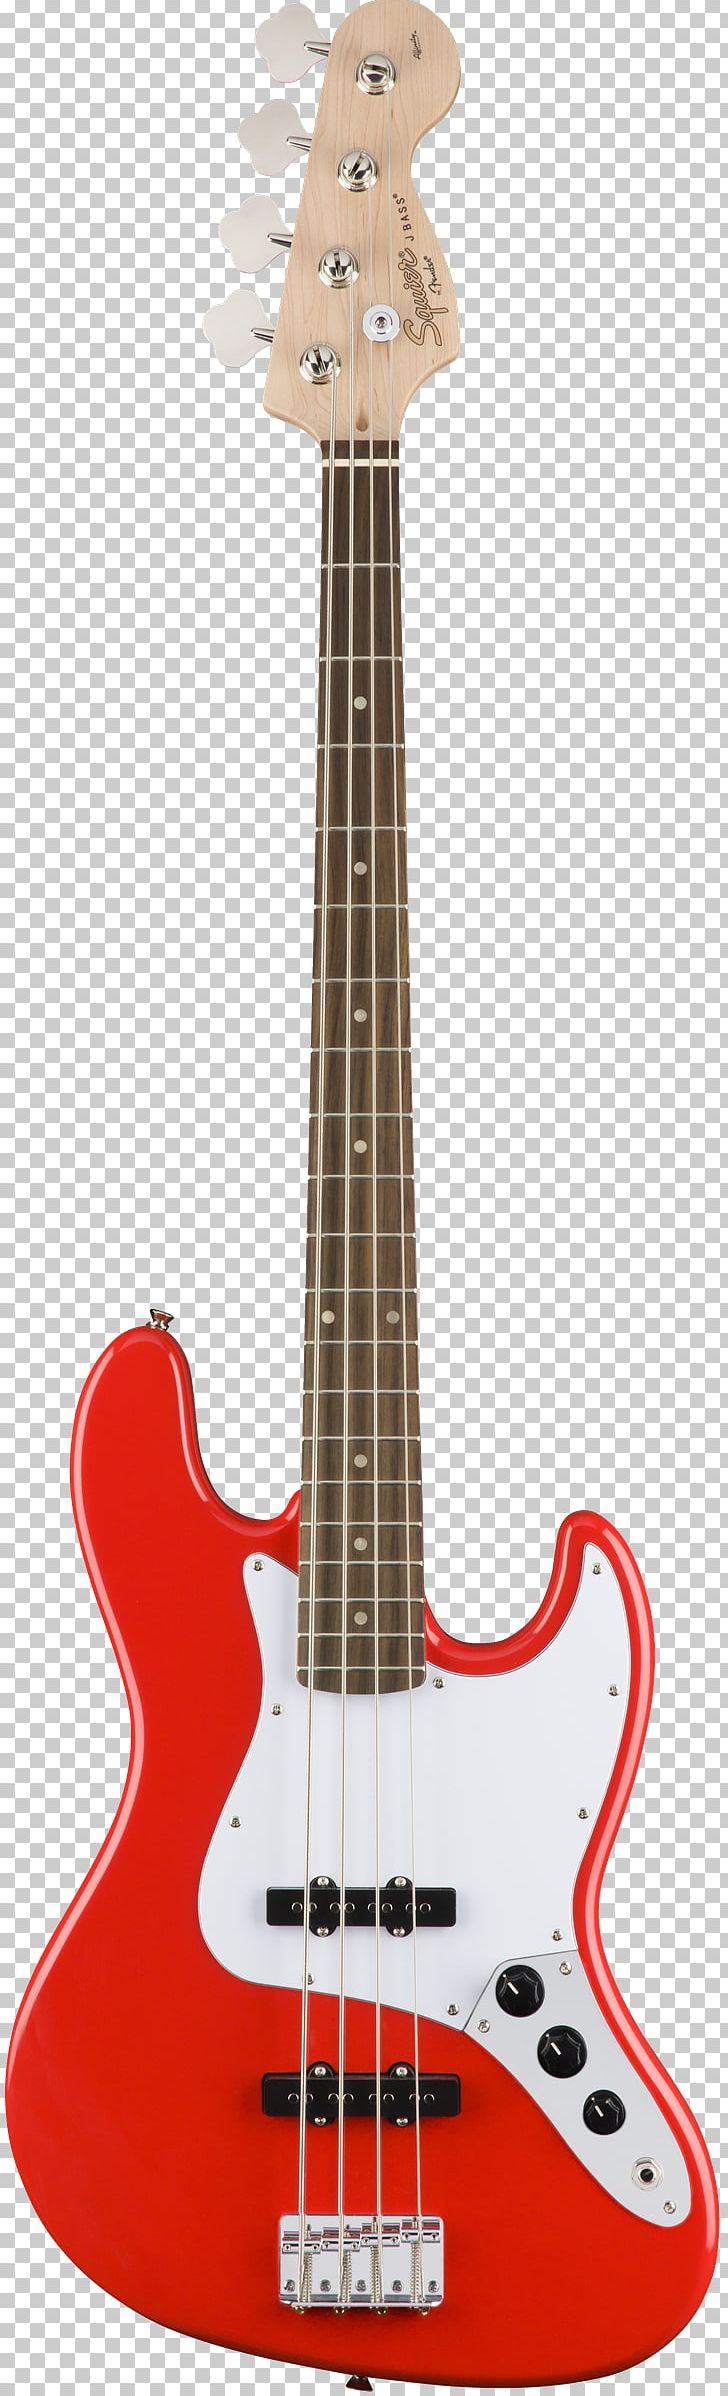 Fender Precision Bass Fender Stratocaster Fender Jaguar Bass Fender Jazz Bass Squier PNG, Clipart, Acoustic Electric Guitar, Bass, Bass Guitar, Electric Guitar, Electronic Musical Instrument Free PNG Download